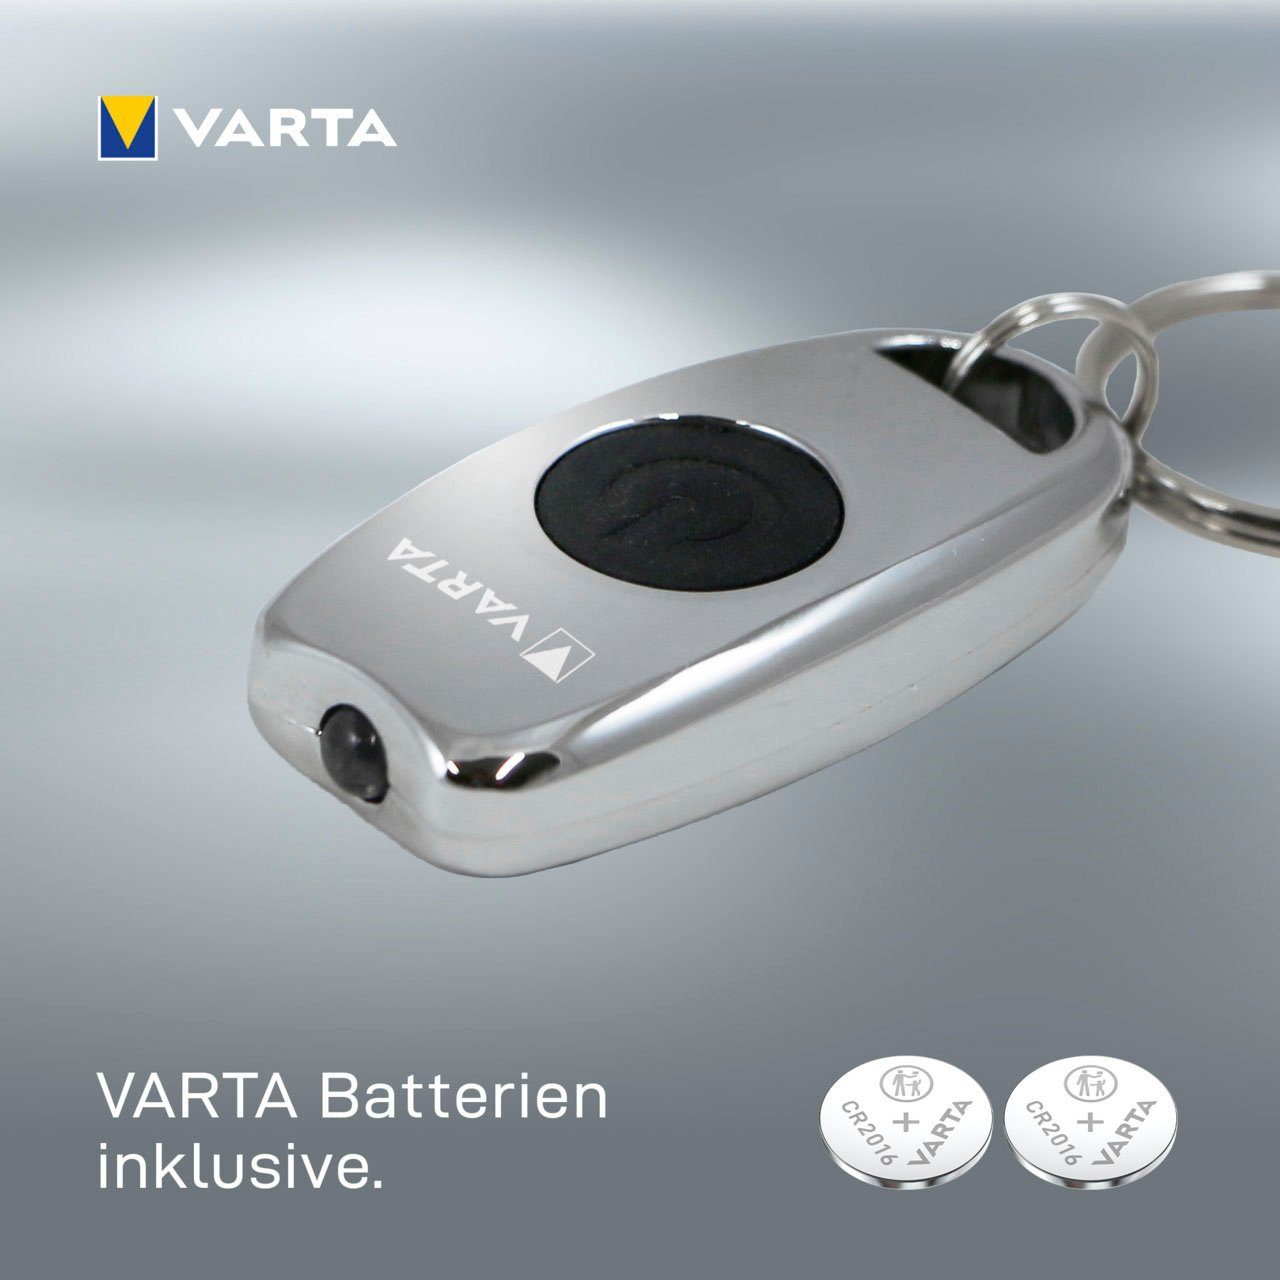 VARTA Taschenlampe Key Light Metal Chain